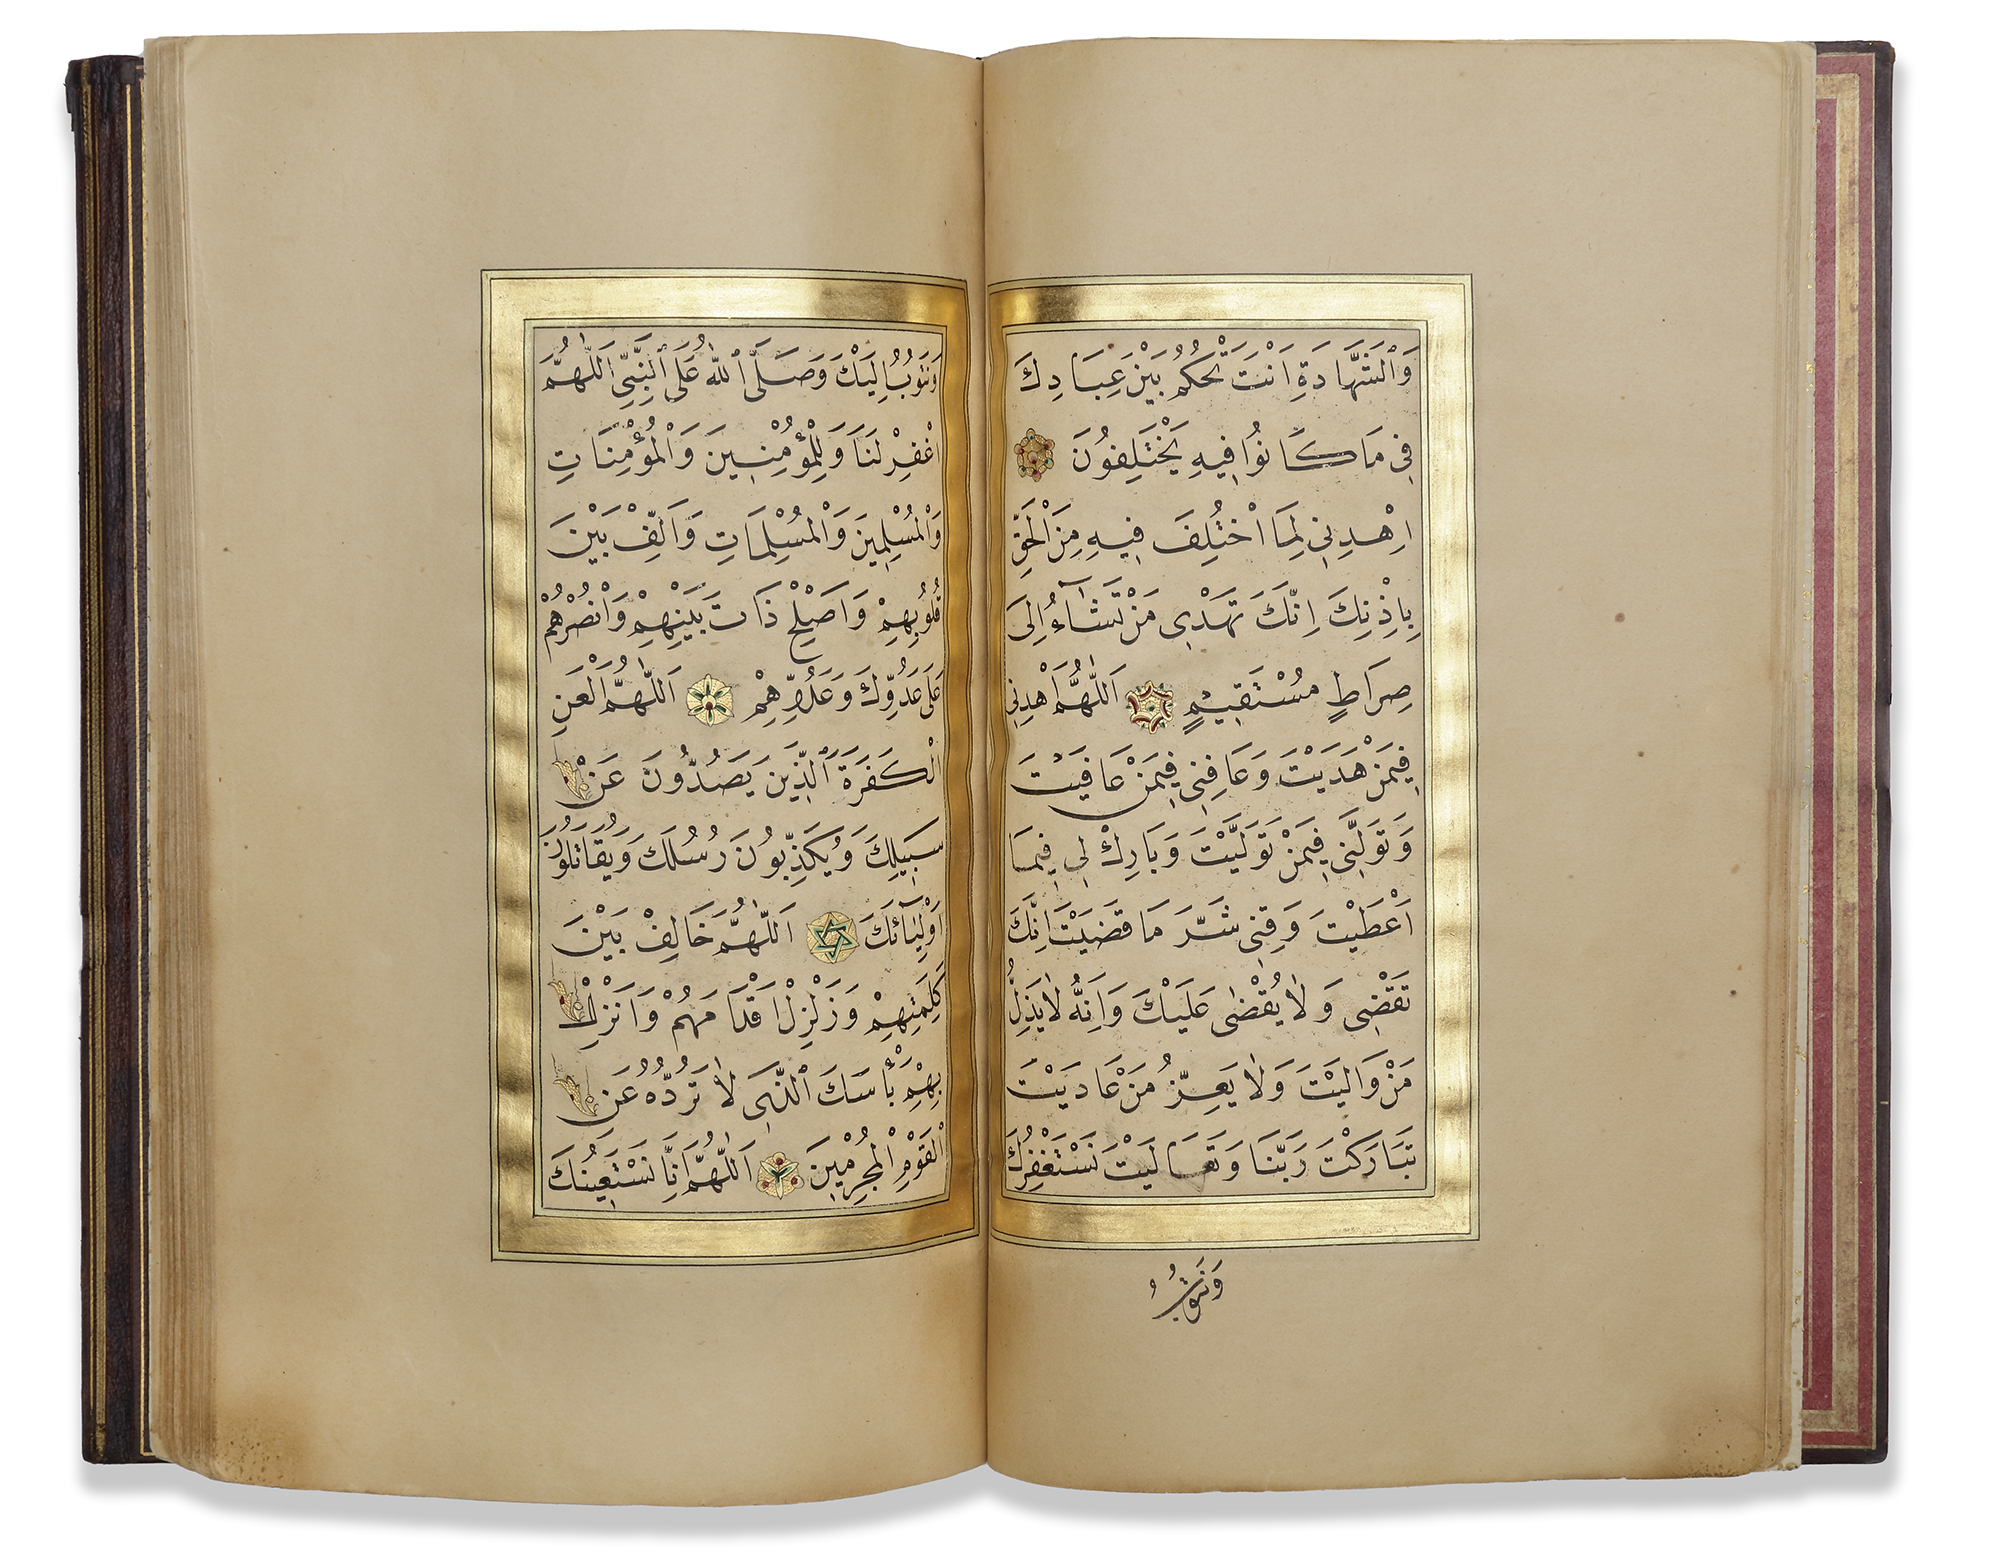 AN ILLUMINATED OTTOMAN PRAYER BOOK SIGNED BY ABDULLAH, TURKEY, 18TH CENTURY - Image 2 of 5